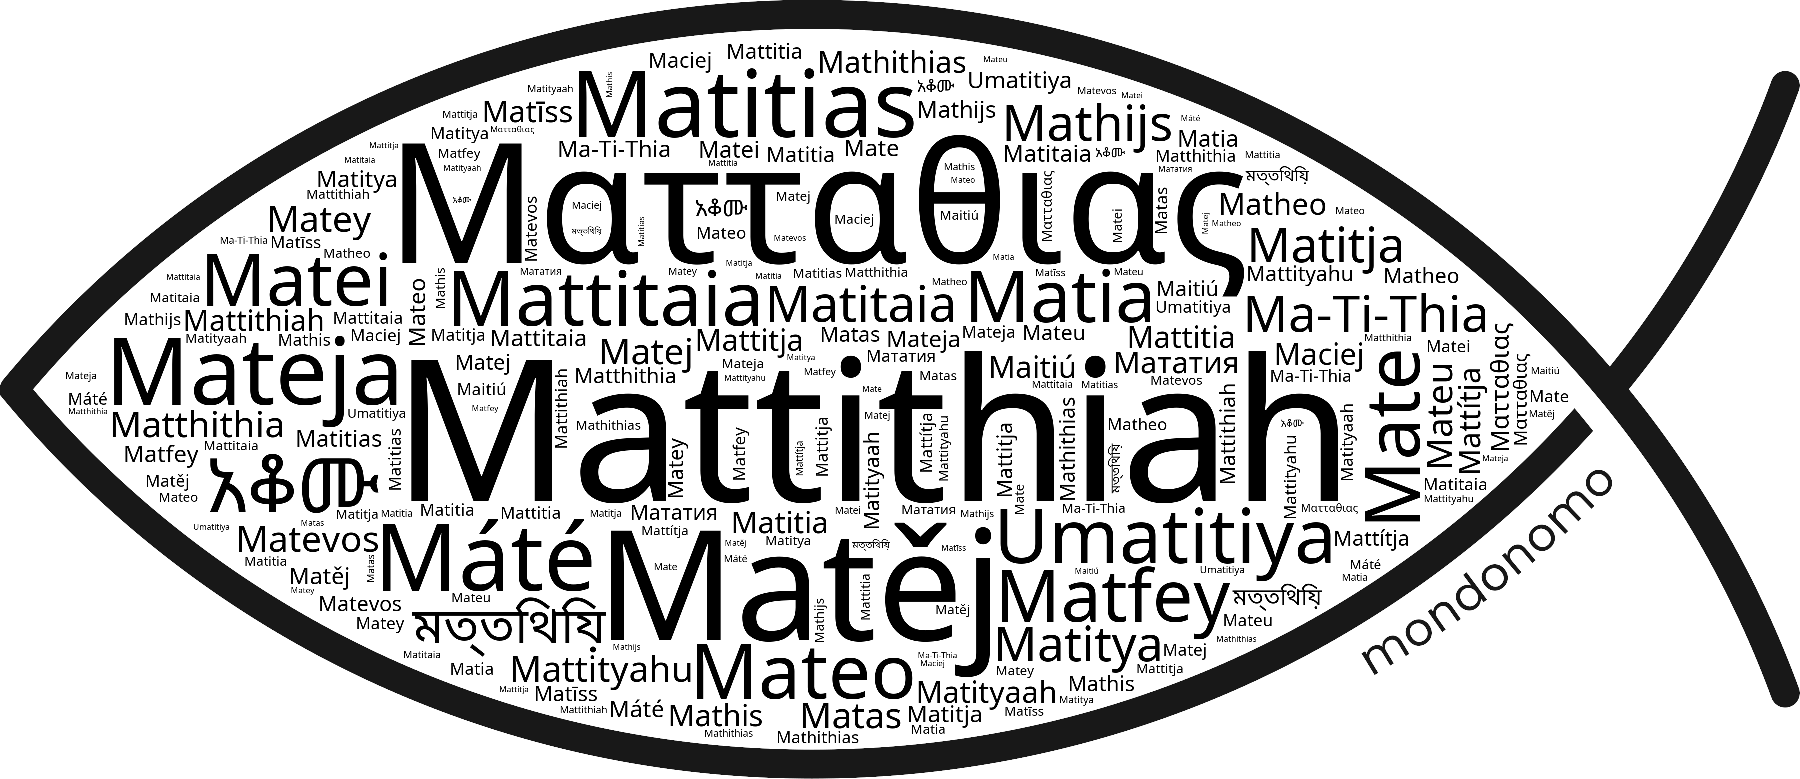 Name Mattithiah in the world's Bibles